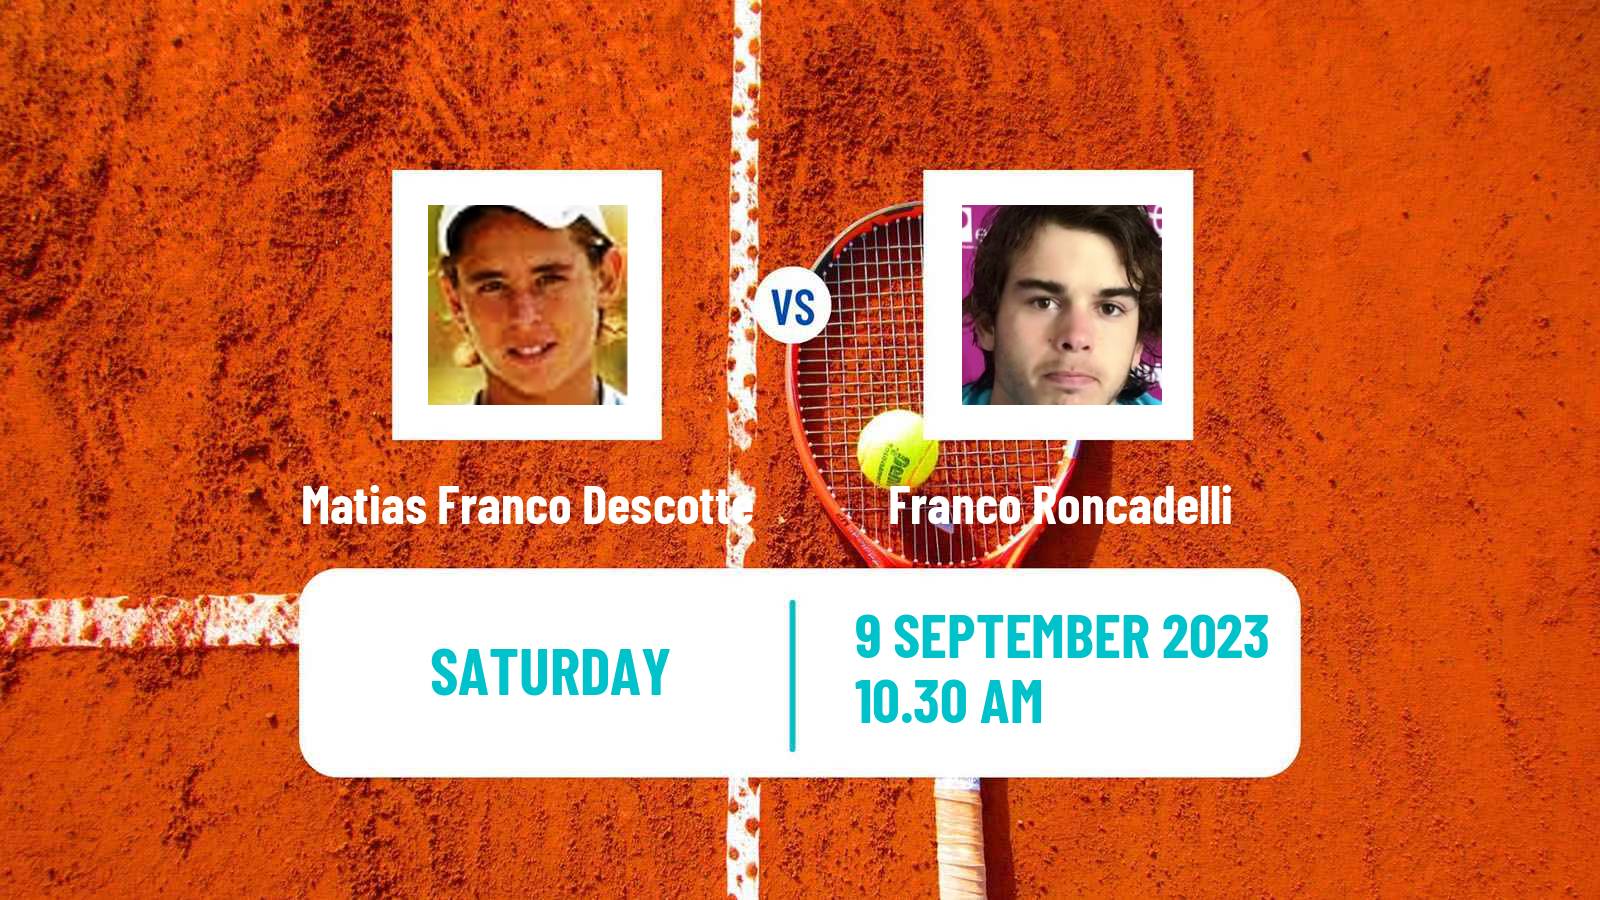 Tennis ITF M15 Olavarria Men Matias Franco Descotte - Franco Roncadelli